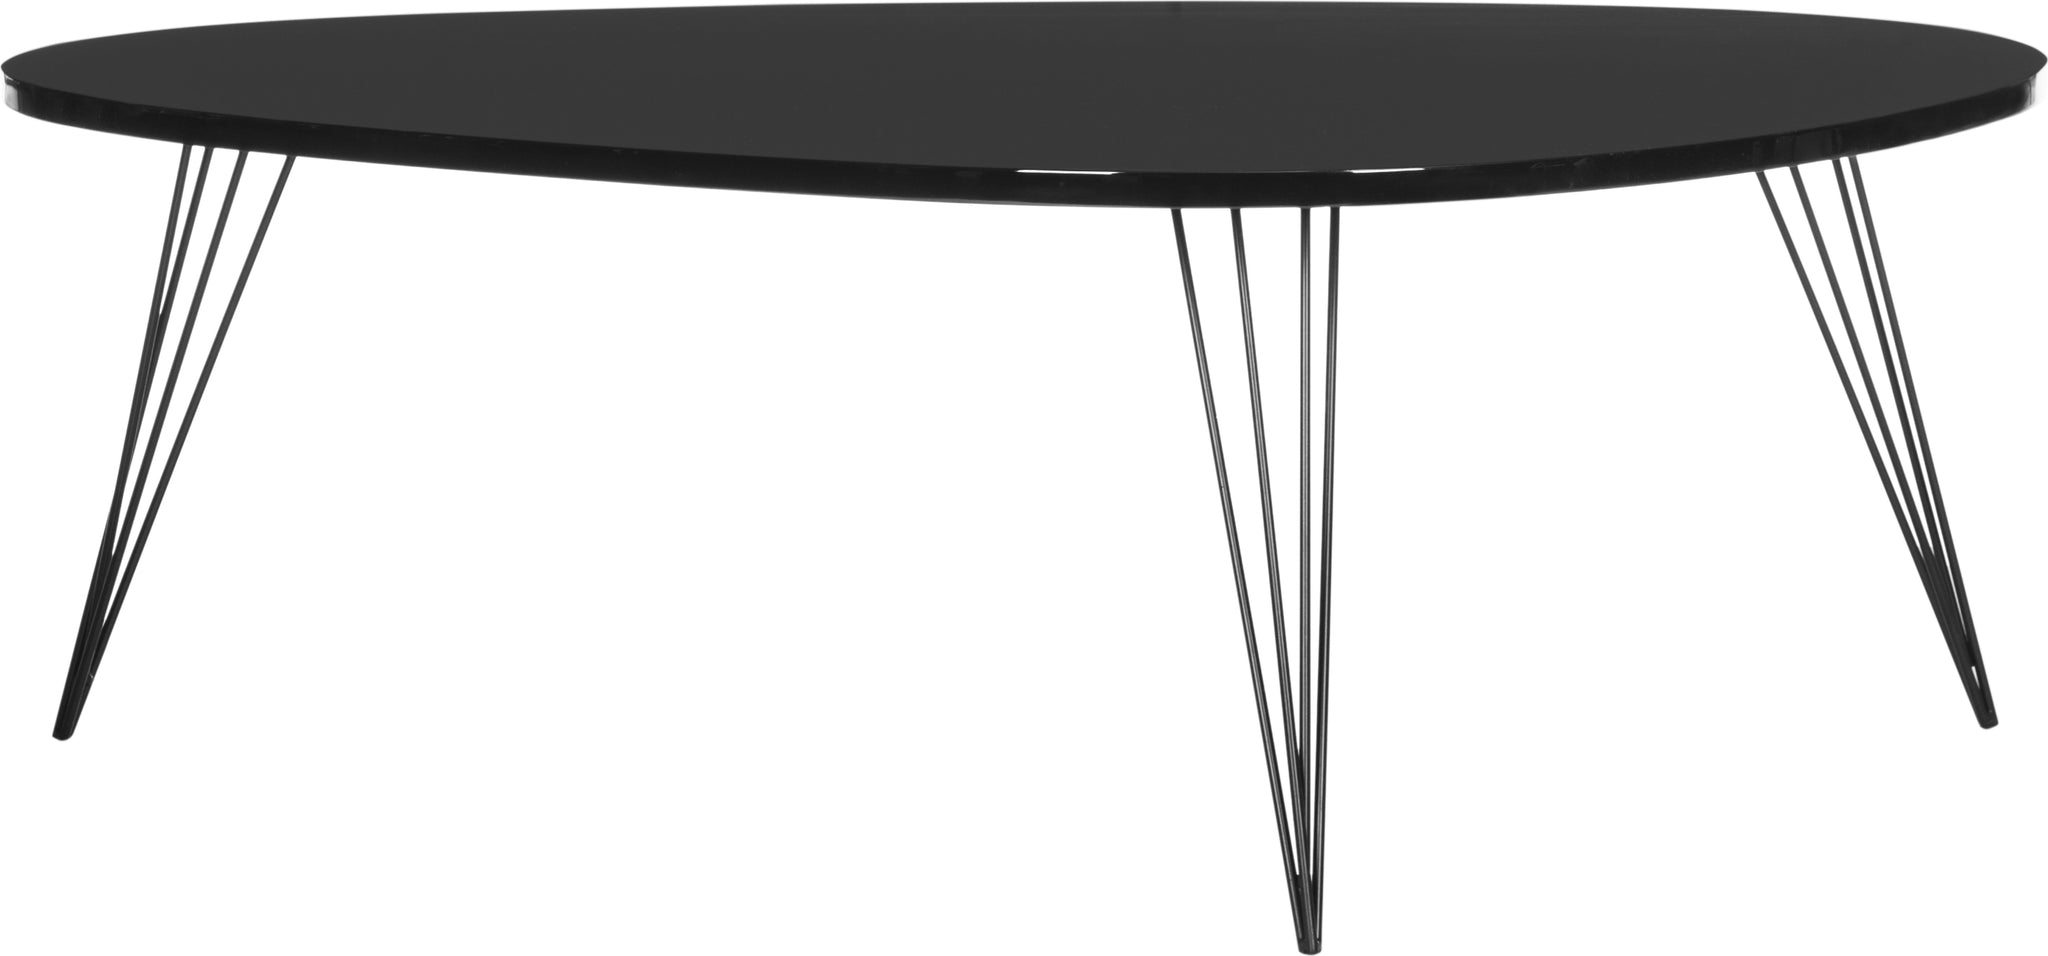 Safavieh Wynton Retro Mid Century Lacquer Coffee Table Black Furniture main image